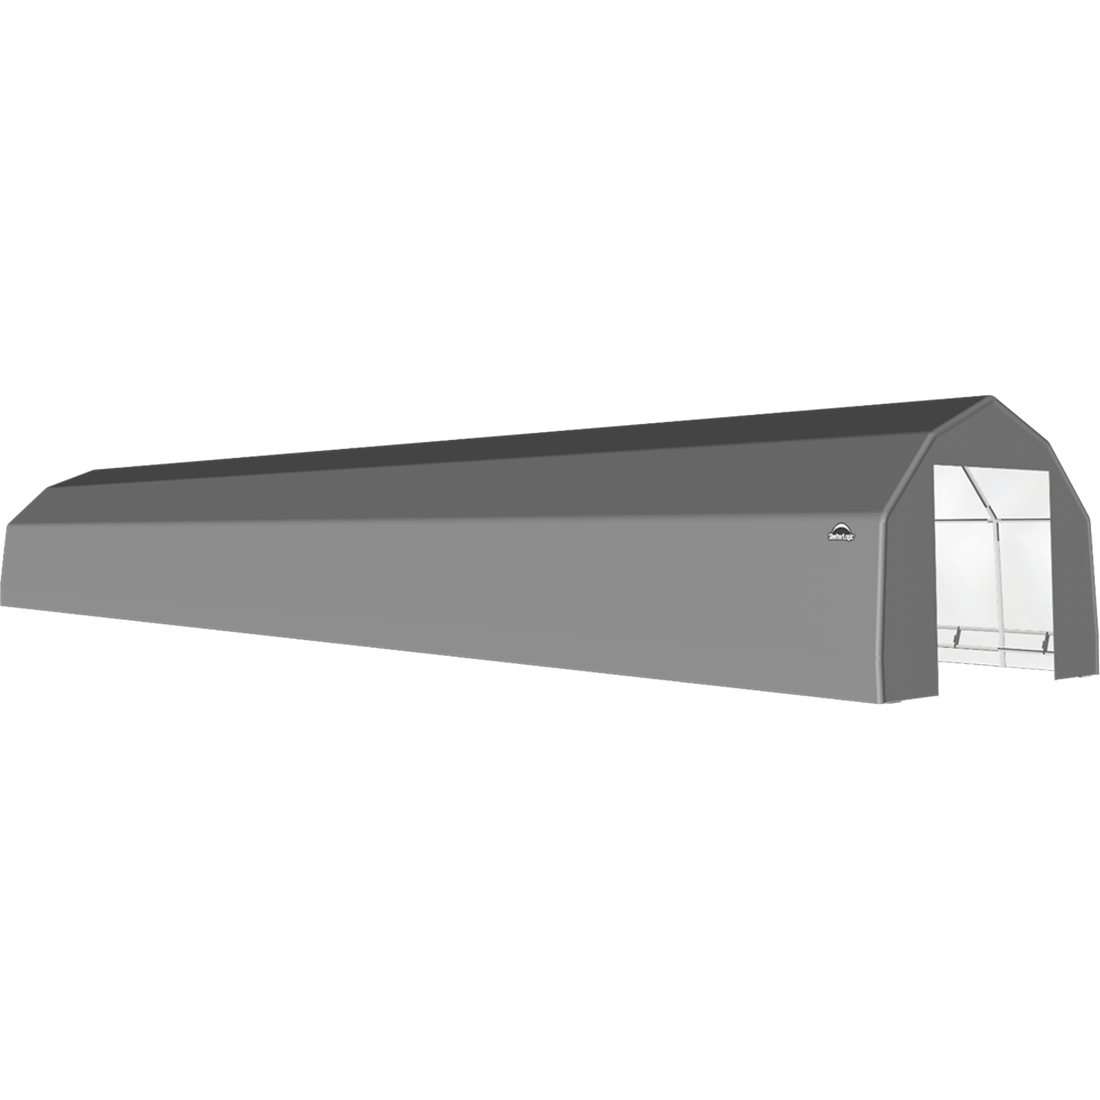 ShelterTech SP Series Barn Shelter, 15 ft. x 76 ft. x 11 ft. Heavy Duty PVC 14.5 oz. Gray